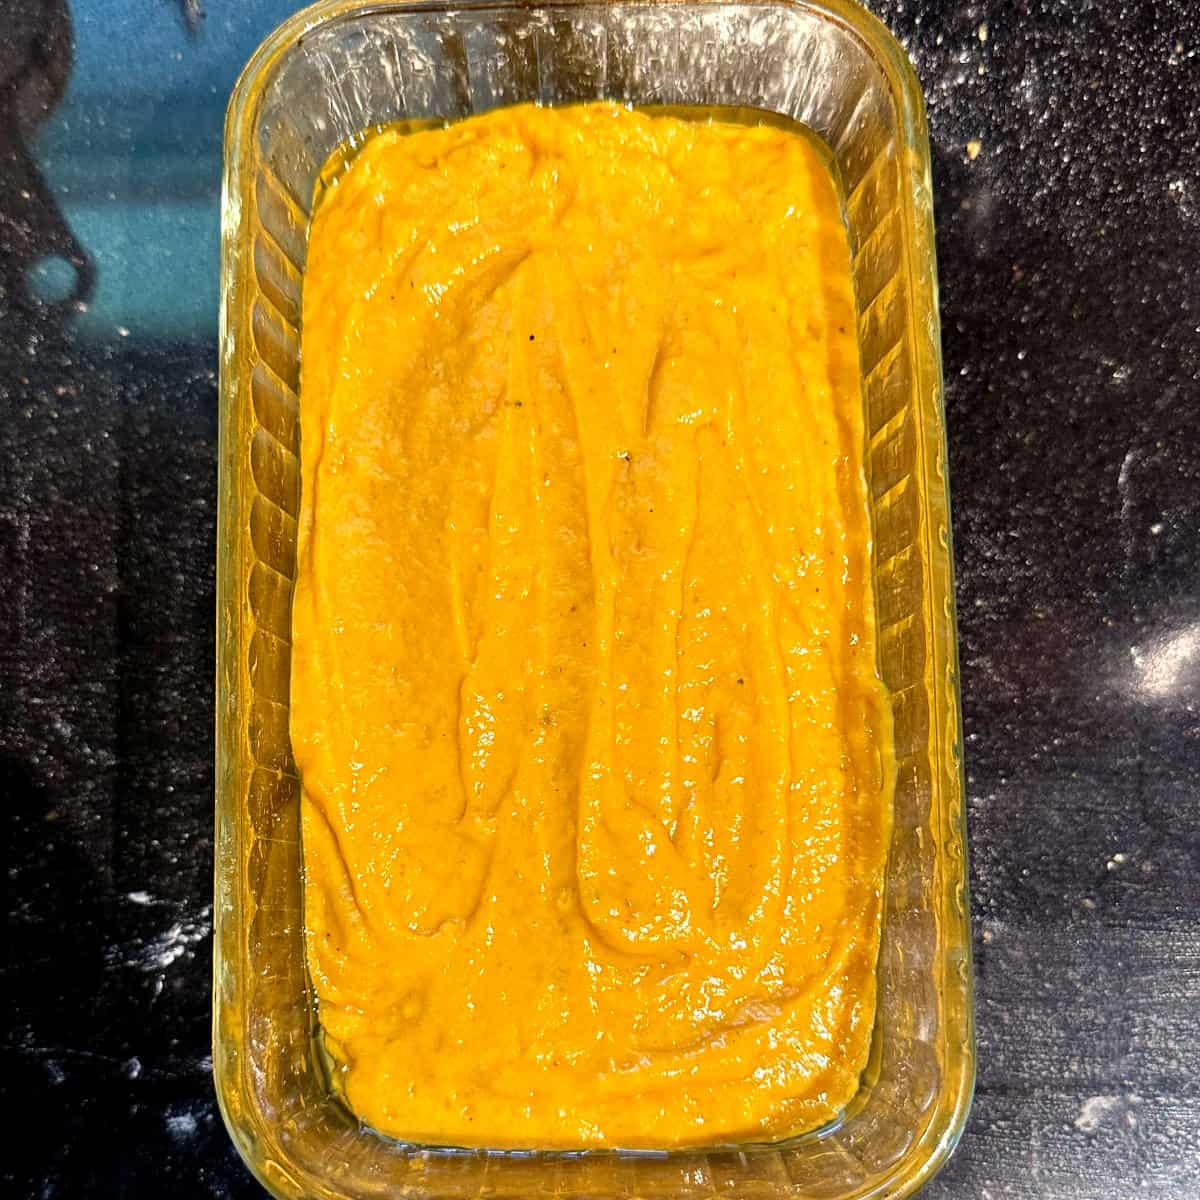 Mango bread batter in glass loaf pan before baking.